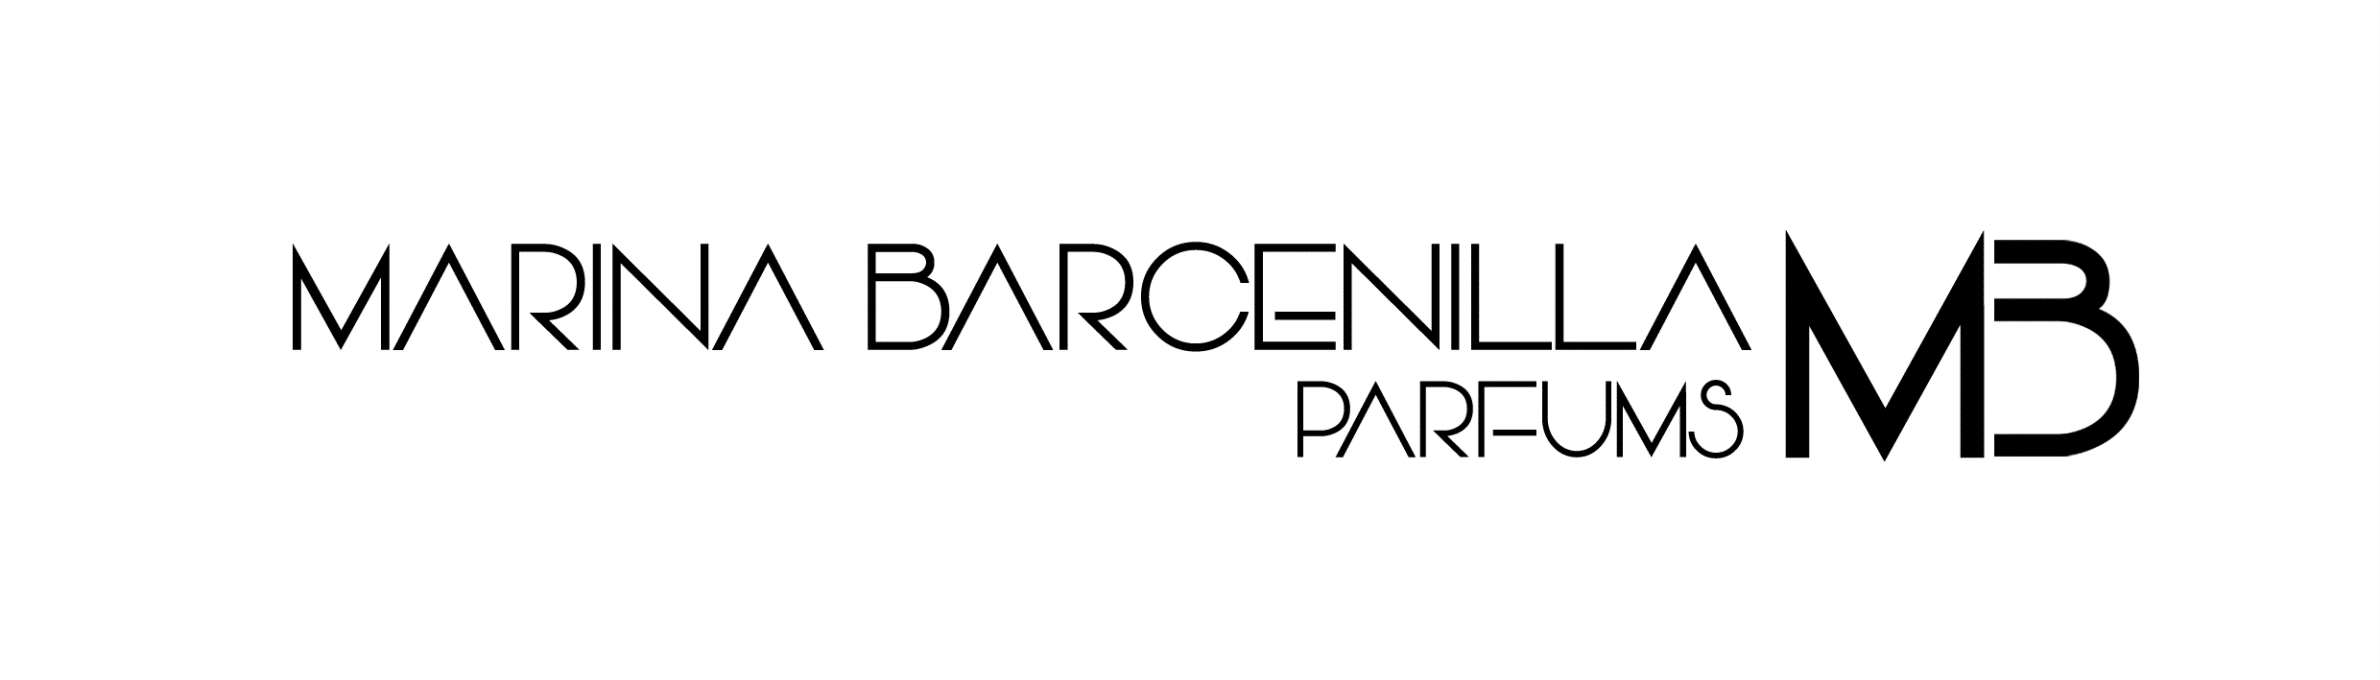 Marina Barcenilla Parfums logo